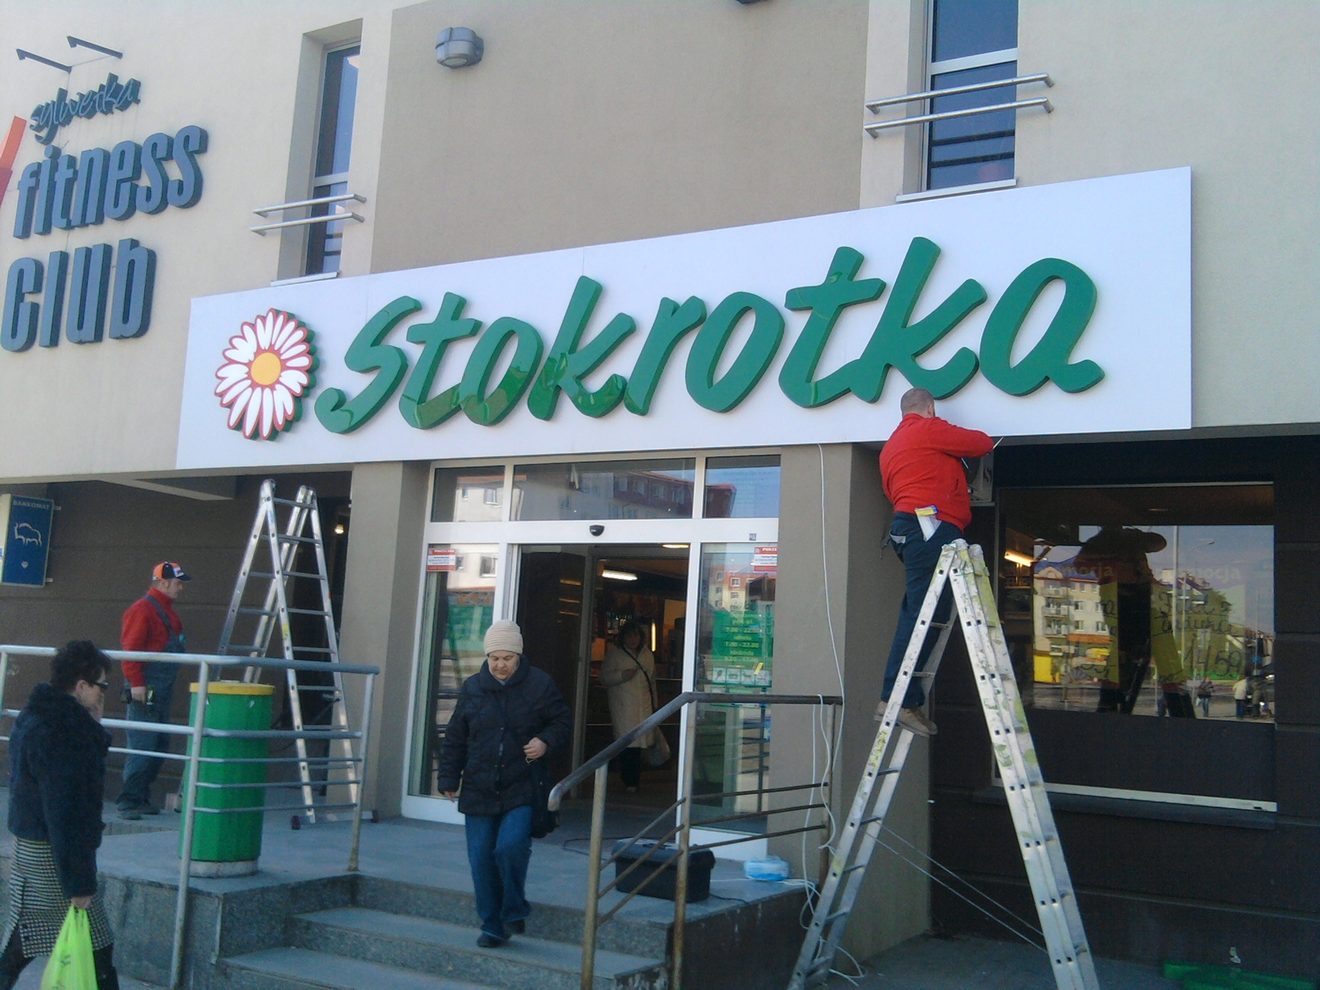 3D advertisement - Stokrotka grocery shop - TTN advertisement producer